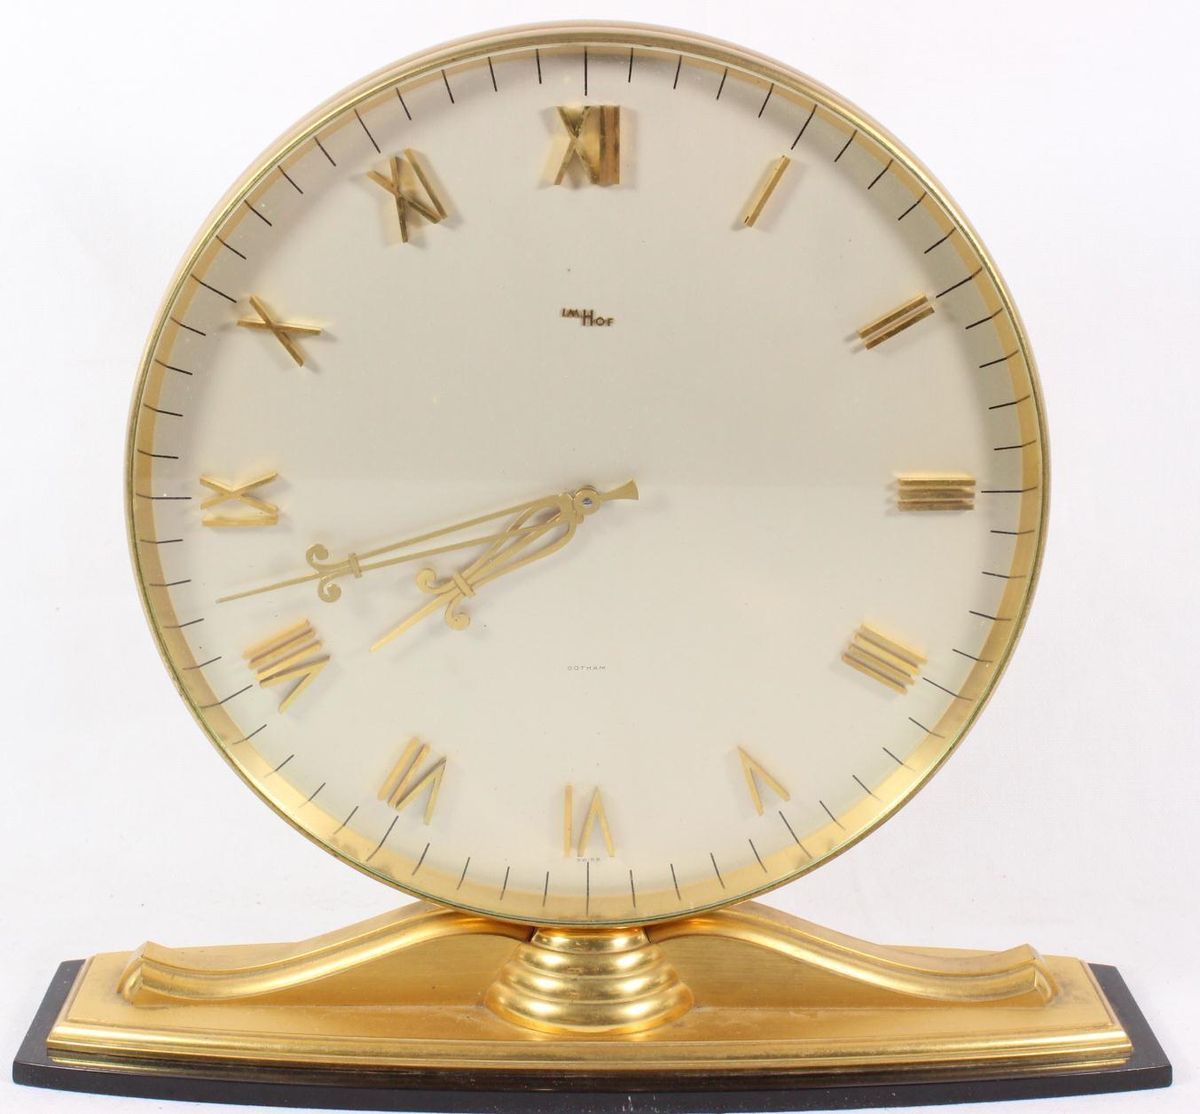 Imhof Gotham Swiss Made 15 Jewels Brushed Brass Mantel Clock   FREE